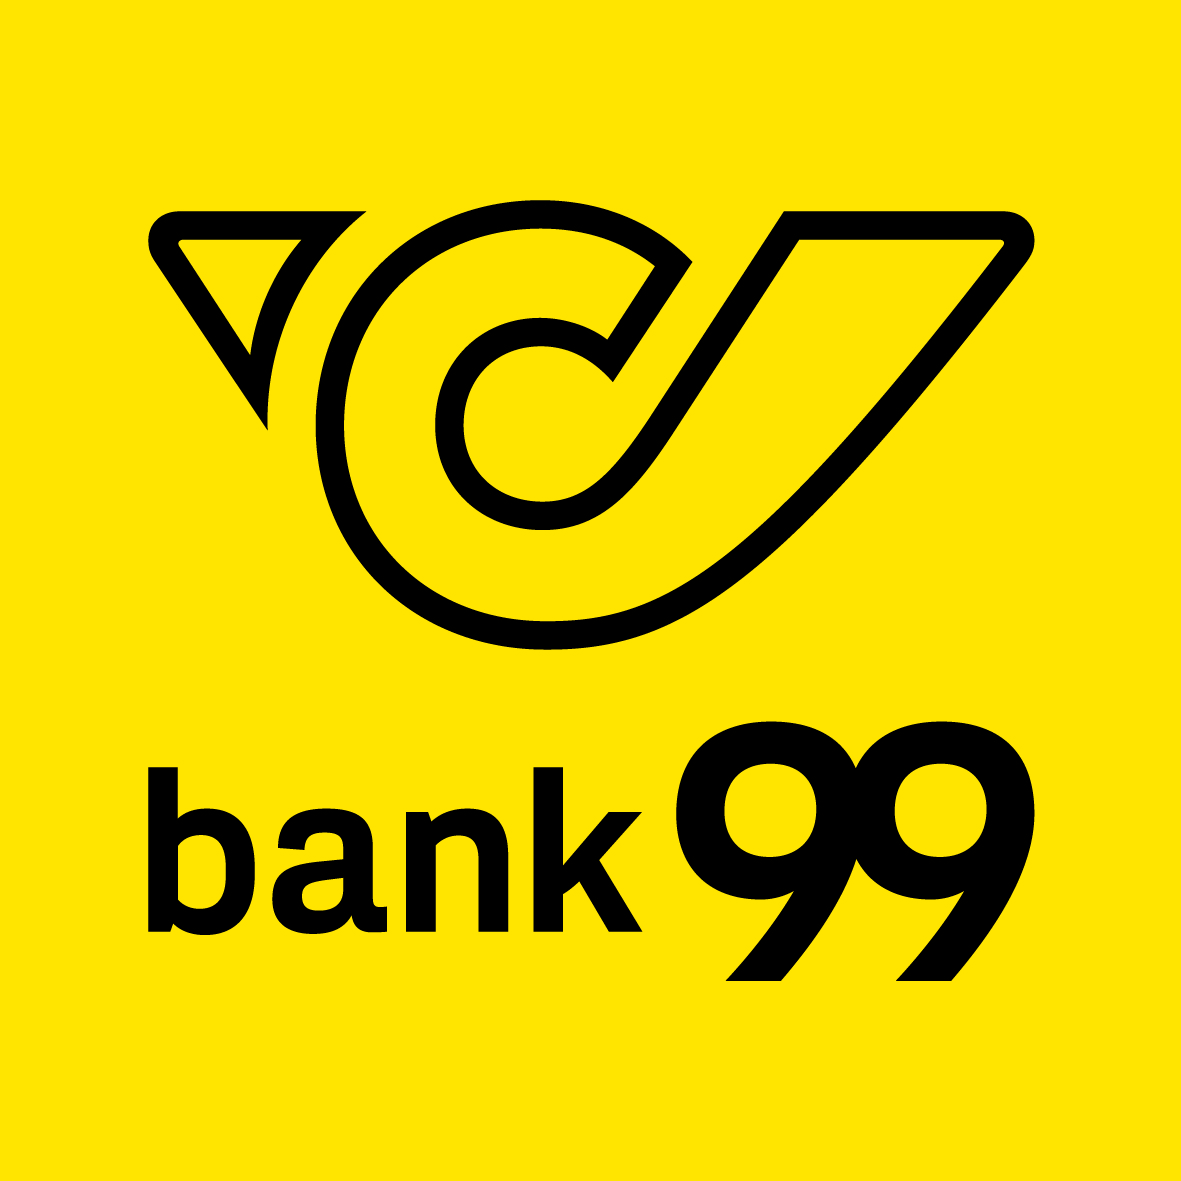 Logo_Post_bank99_PP CMYK RZ